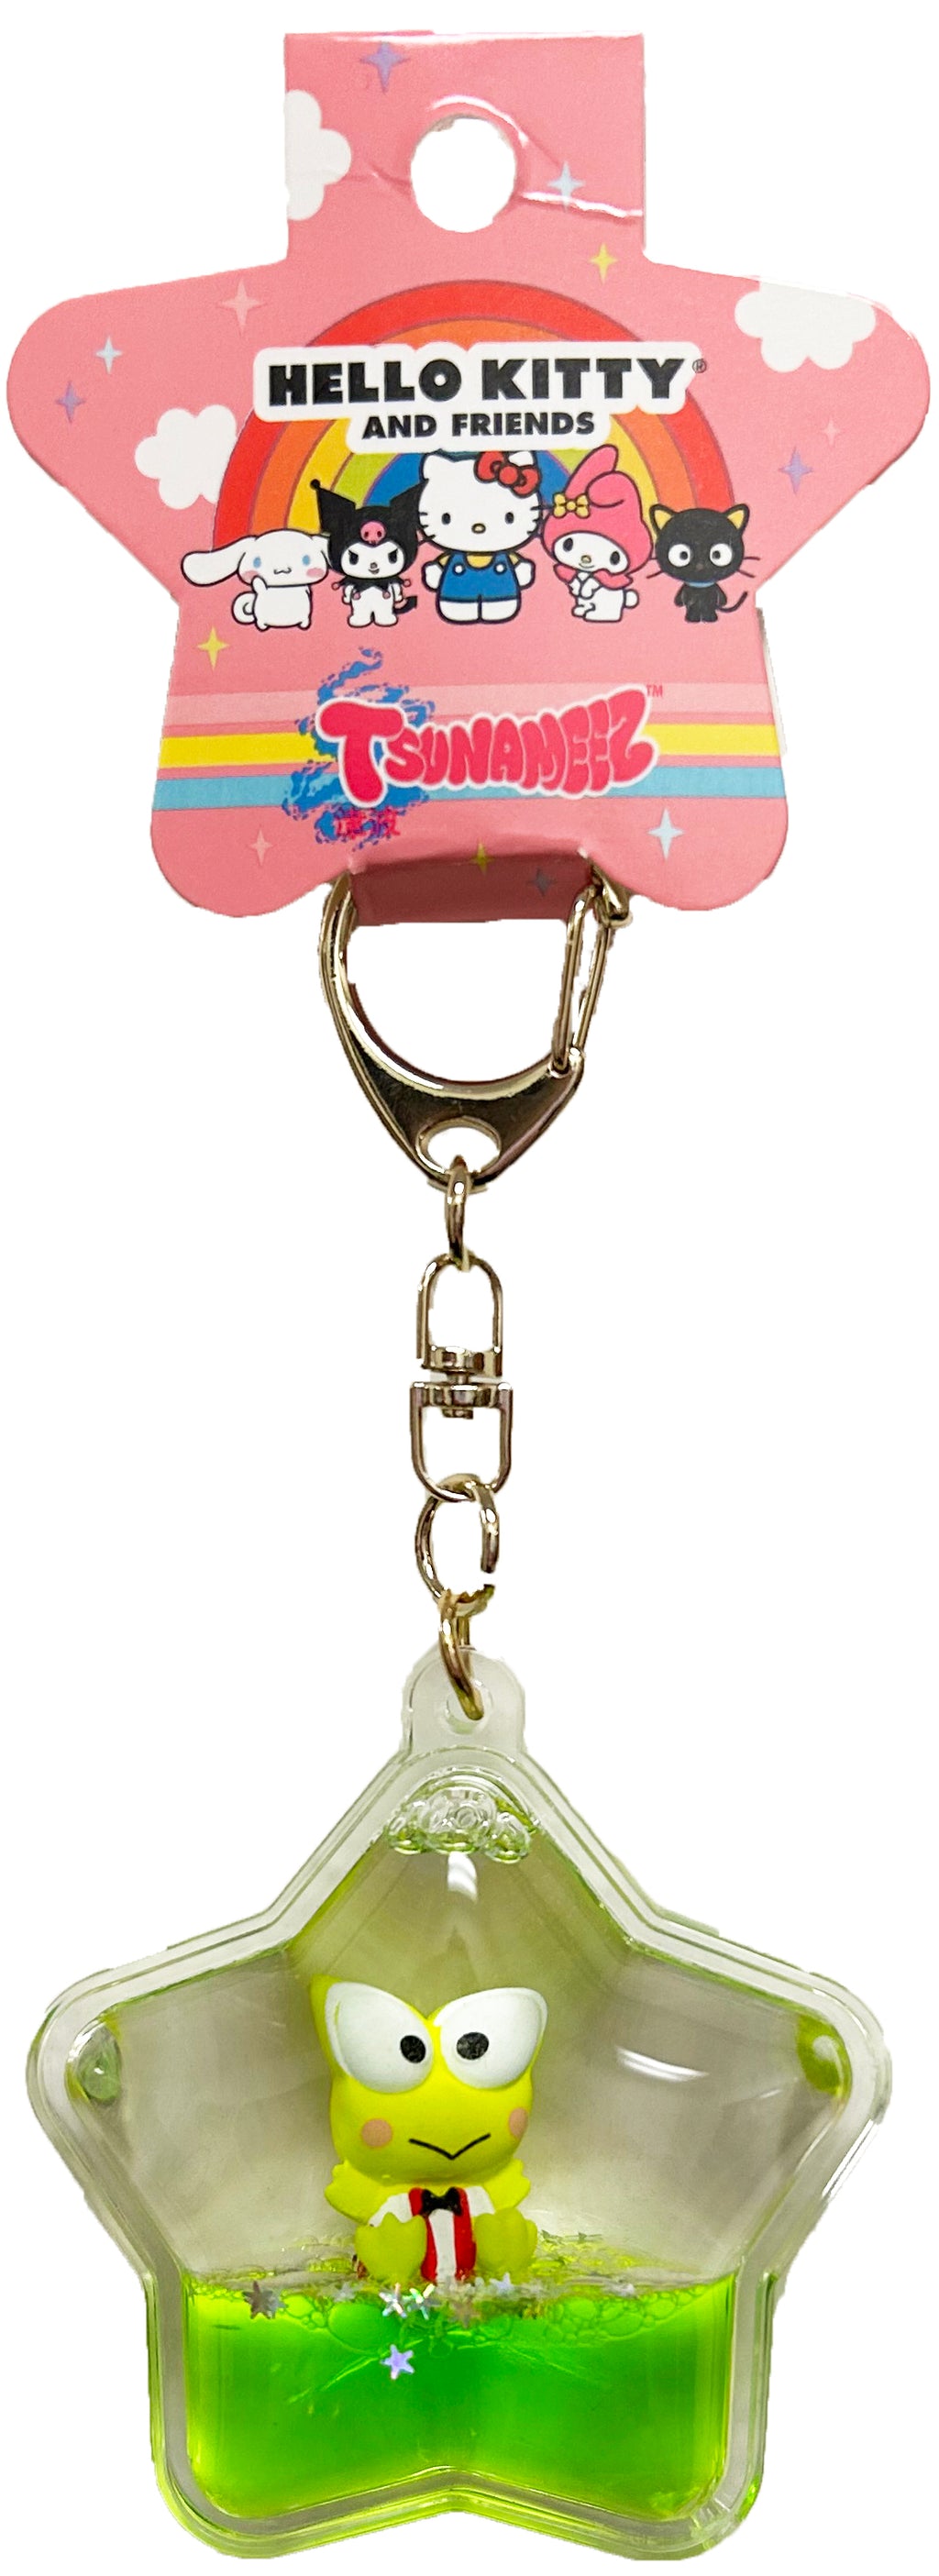 Hello Kitty Tsunameez Keychain Chococat